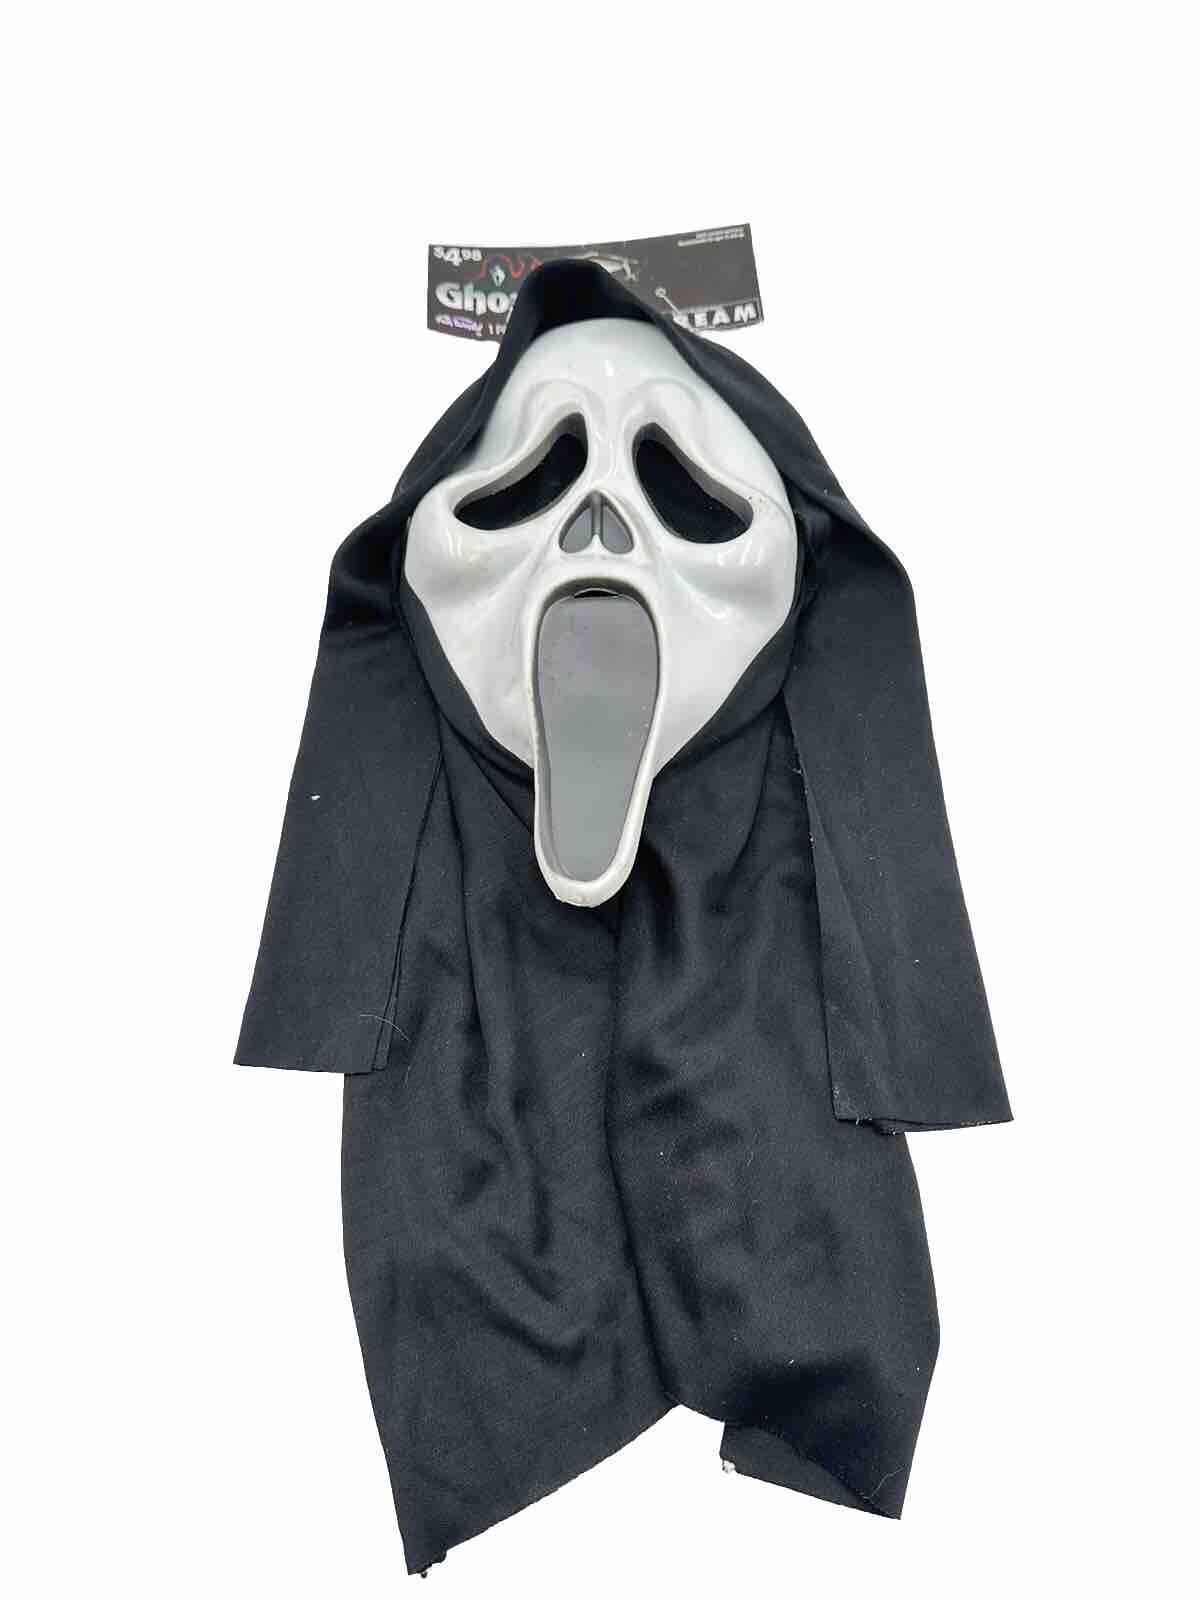 Scream Ghost Face Mask 2019 Fun World Easter Unlimited Halloween Ghostface B50